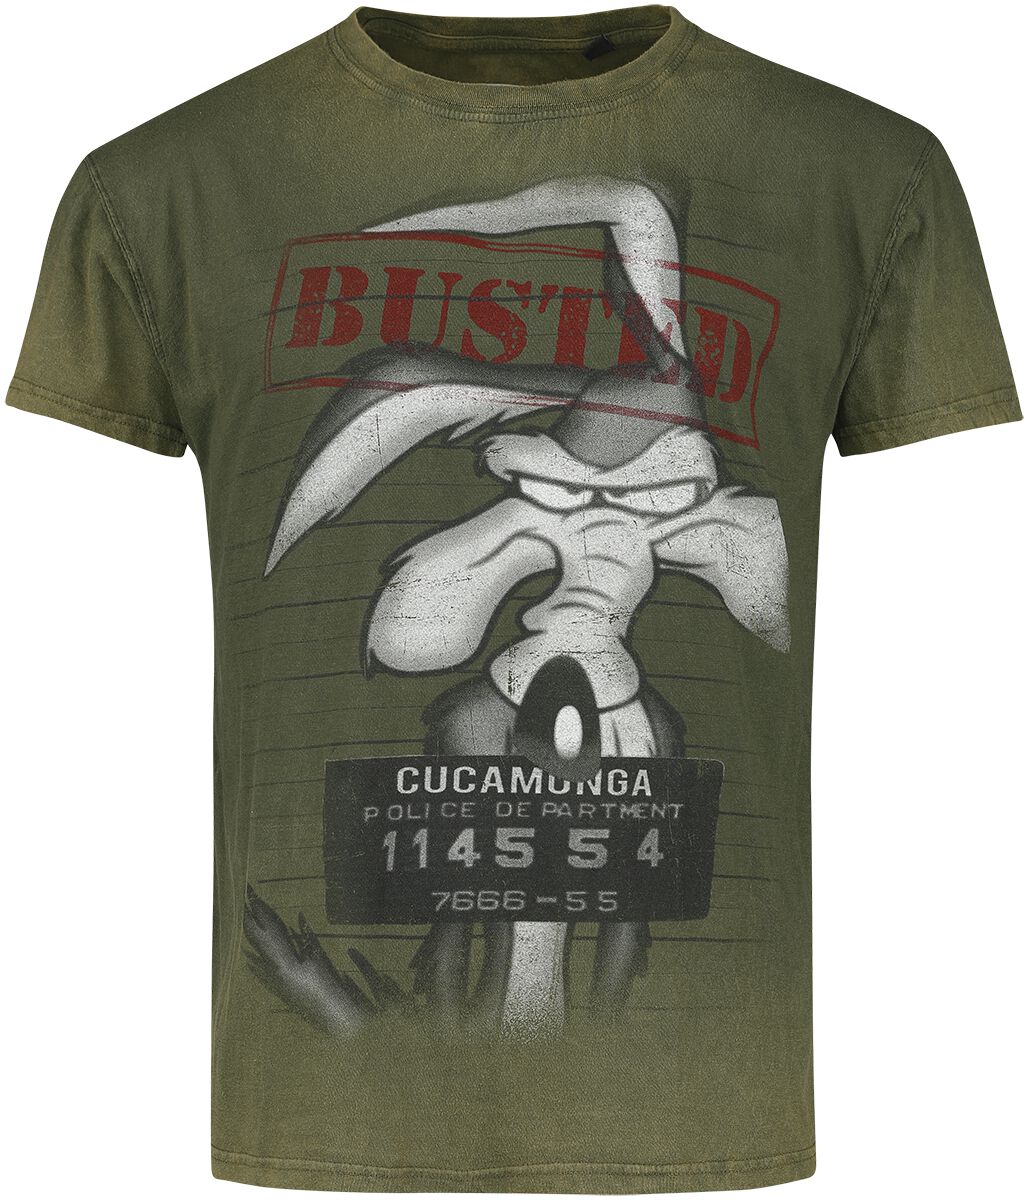 looney tunes t-shirt - wile e. coyote - wanted - s bis xxl - fÃ¼r mÃ¤nner - grÃ¶ÃŸe s - - emp exklusives merchandise! grÃ¼n